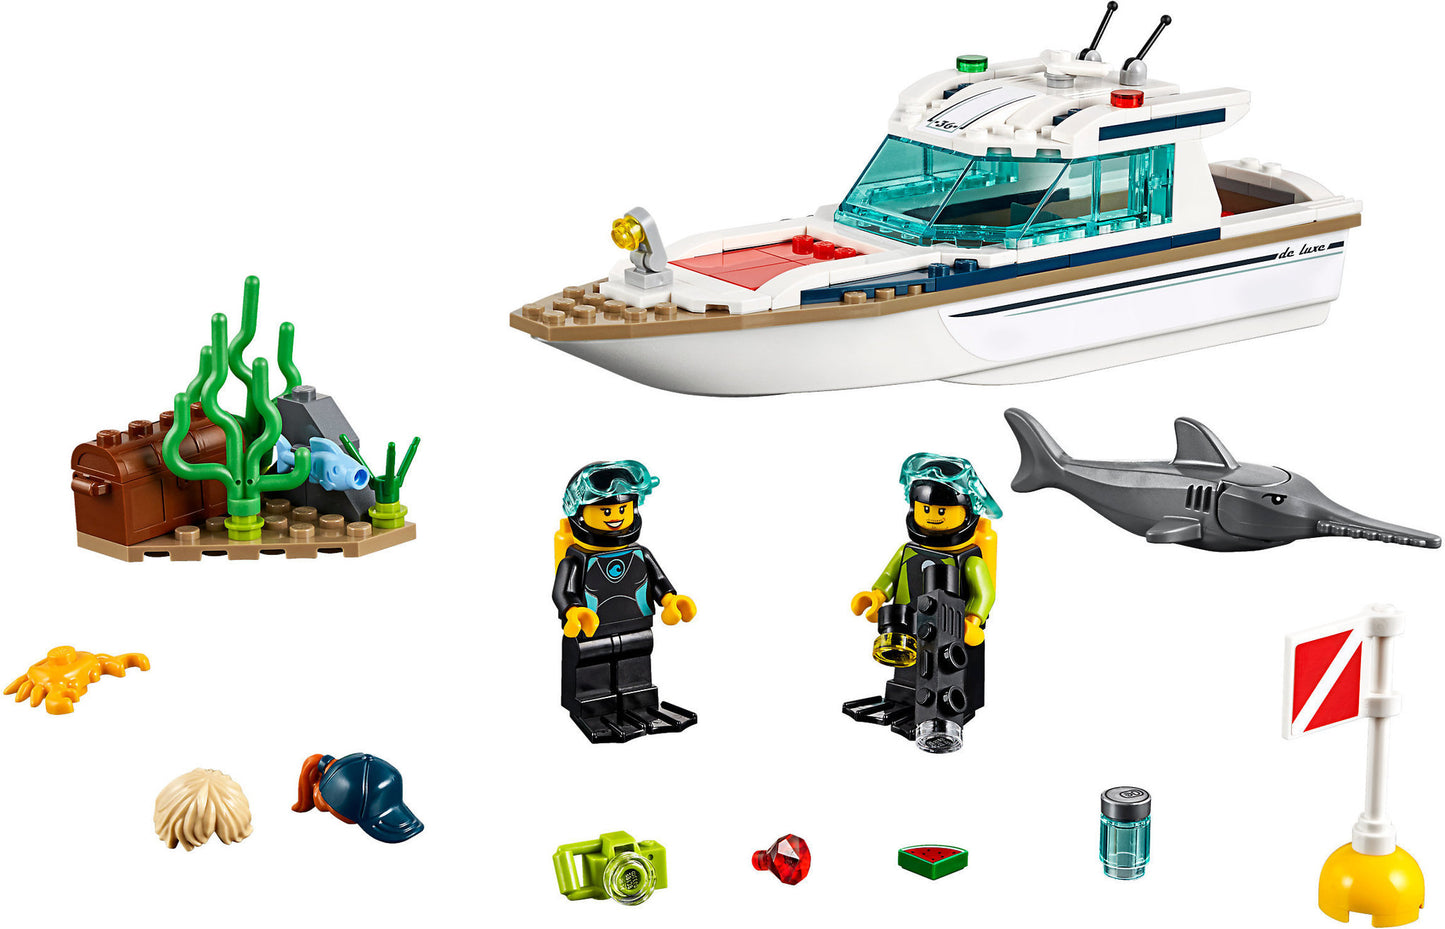 60221 LEGO City - Yacht Per Immersioni